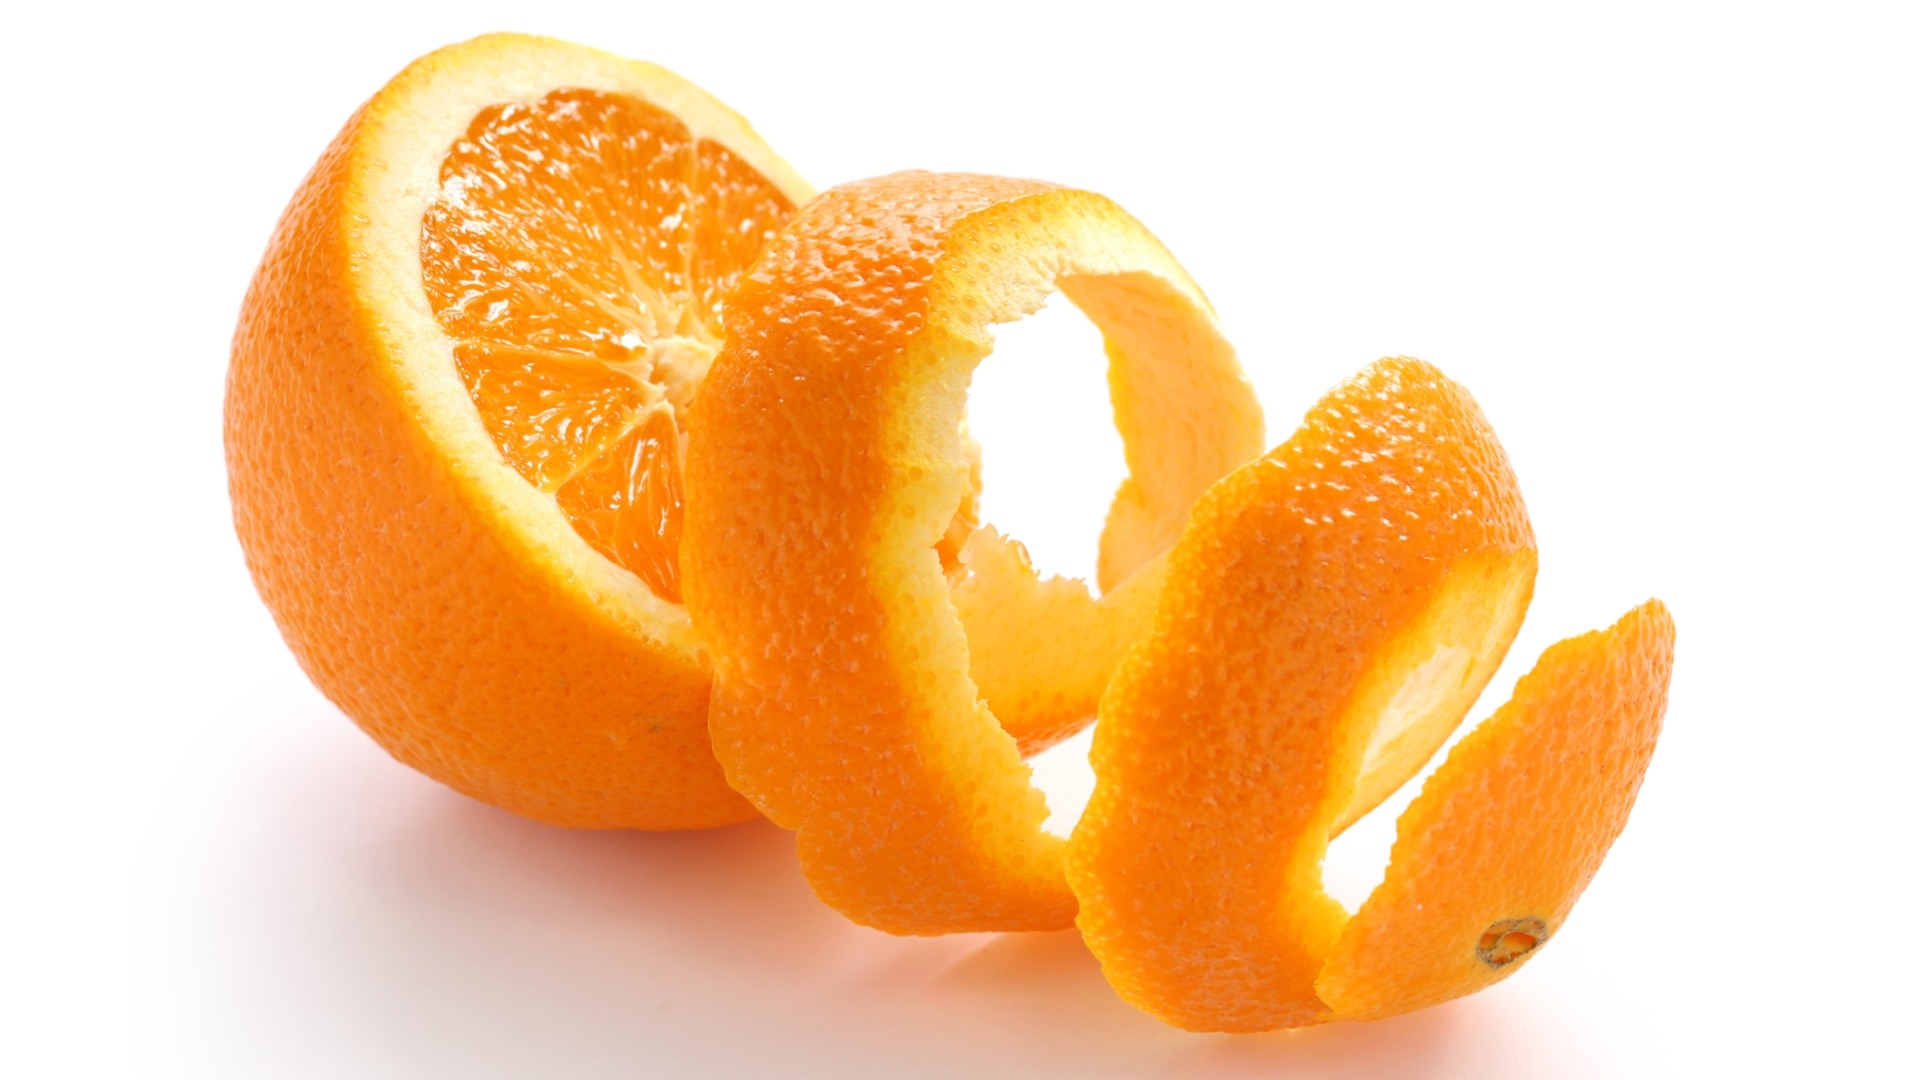 zest, peel, orange, citrus